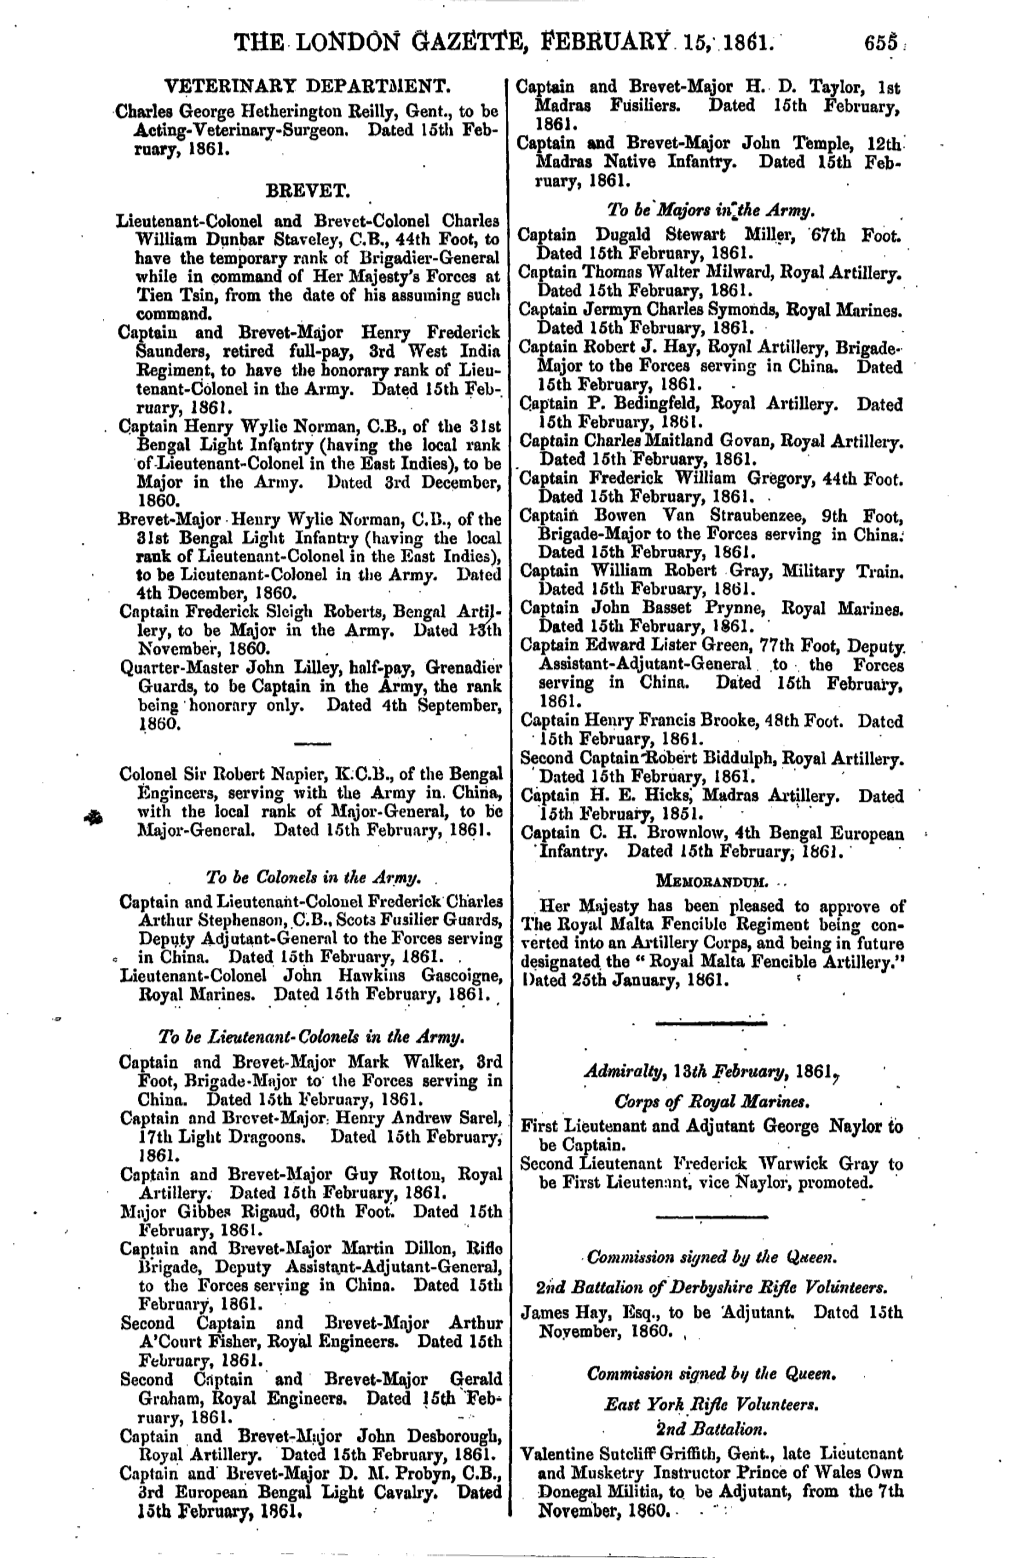 The London Gazette, Febeuary 15, 1861. 655